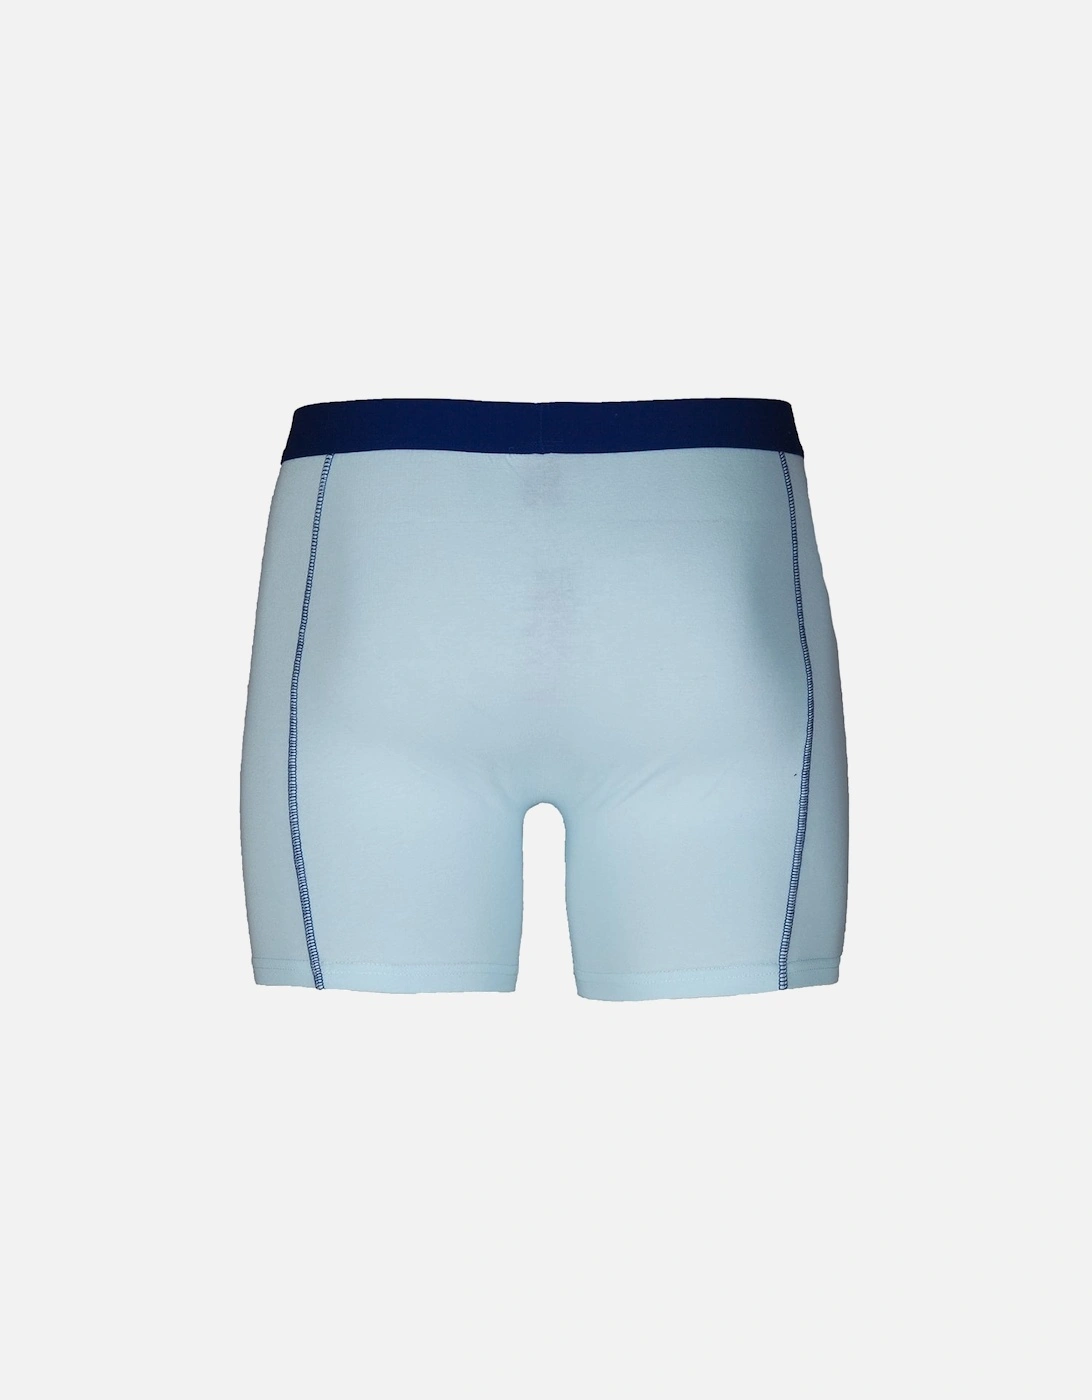 Mens Cotton Stretch Aqua Blue Boxer Shorts